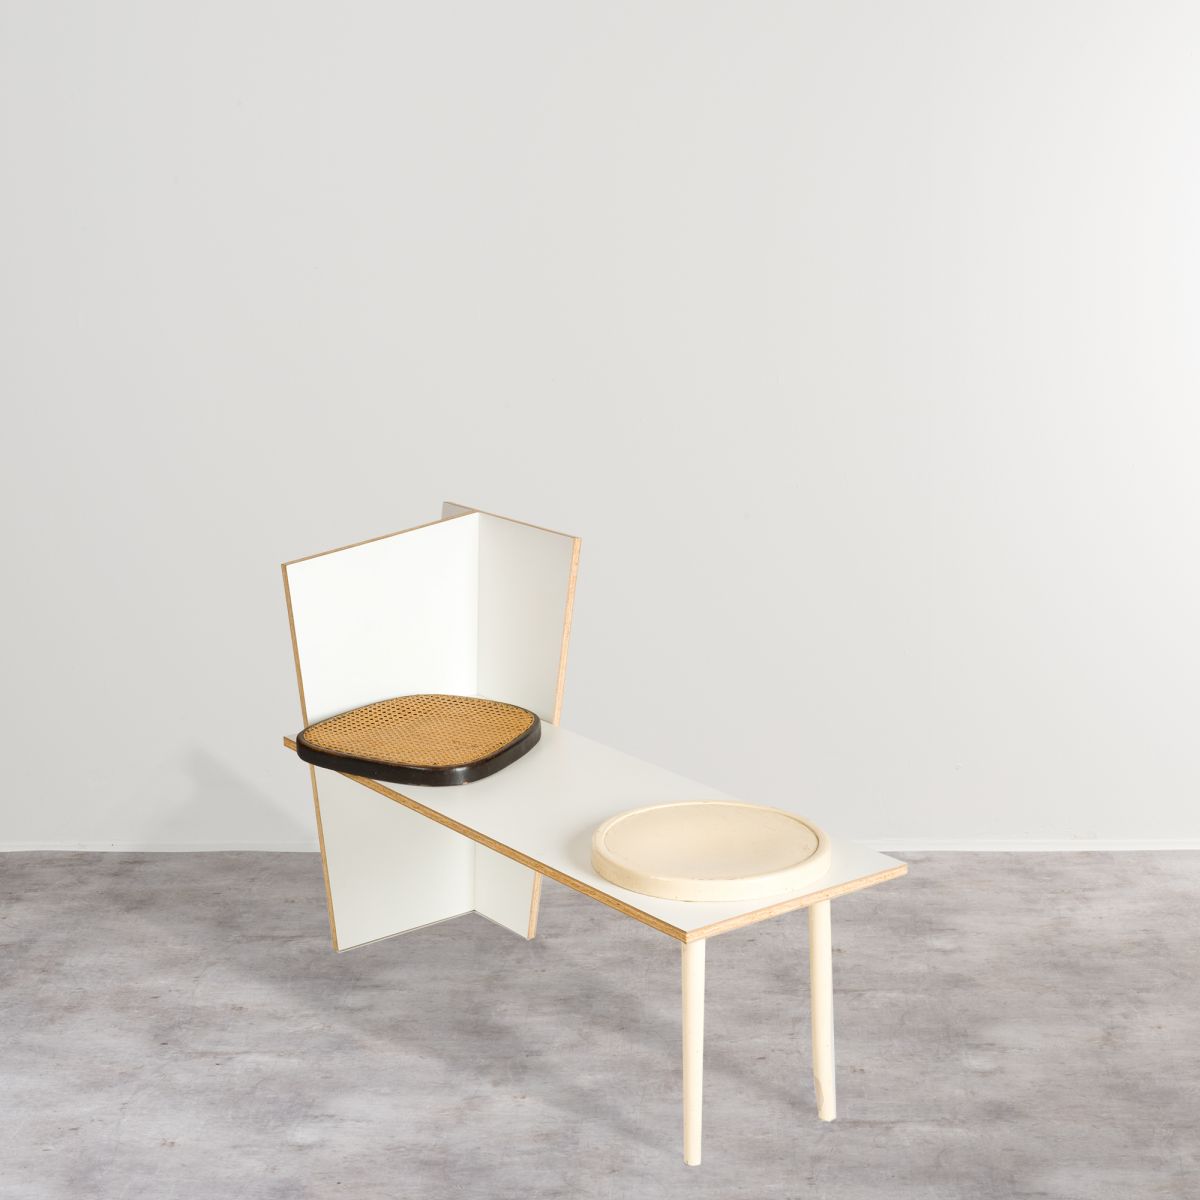 'Bench Chair' Martino Gamper pic-1